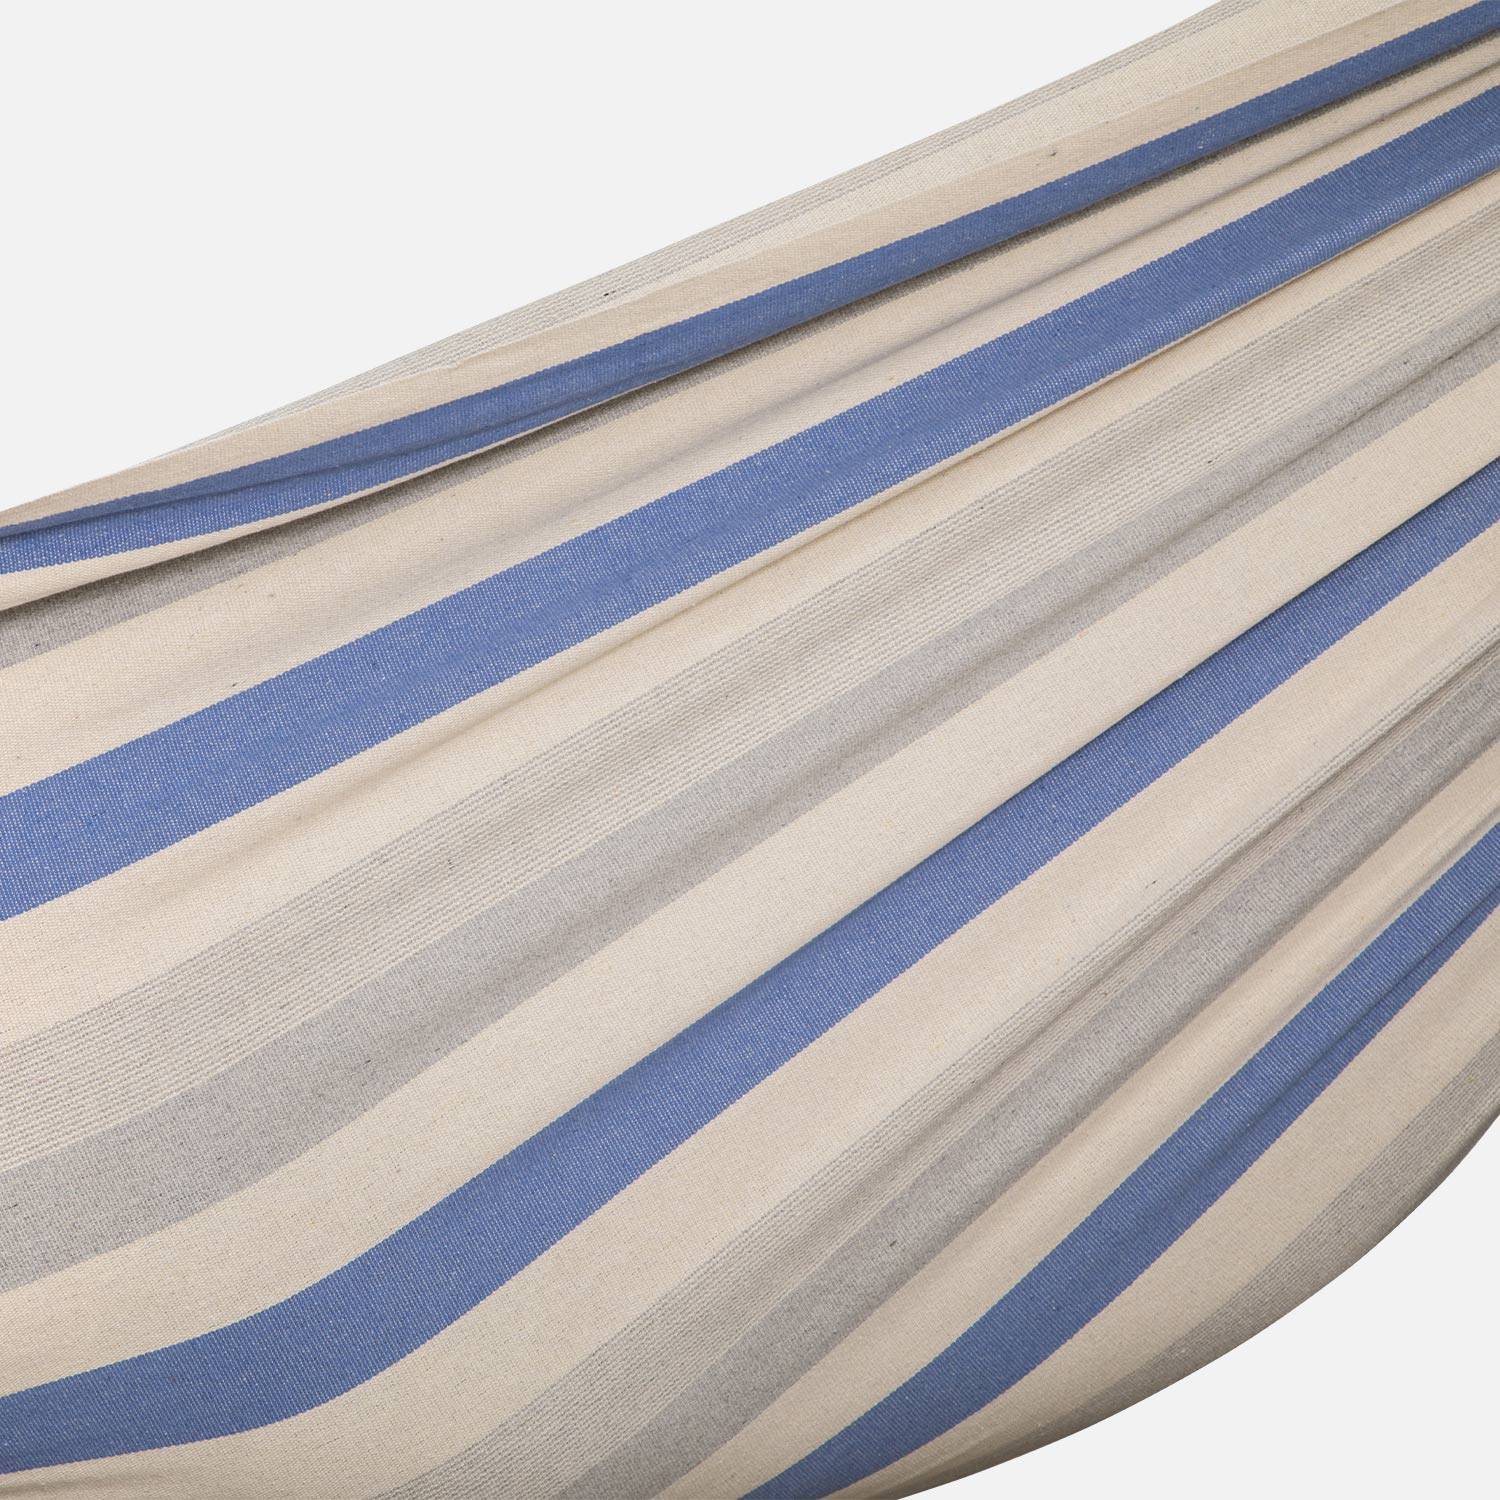 Funda de hamaca a rayas - azul turquesa / gris claro / crudo, 1 persona, 100% polialgodón, 240x160cm Photo5